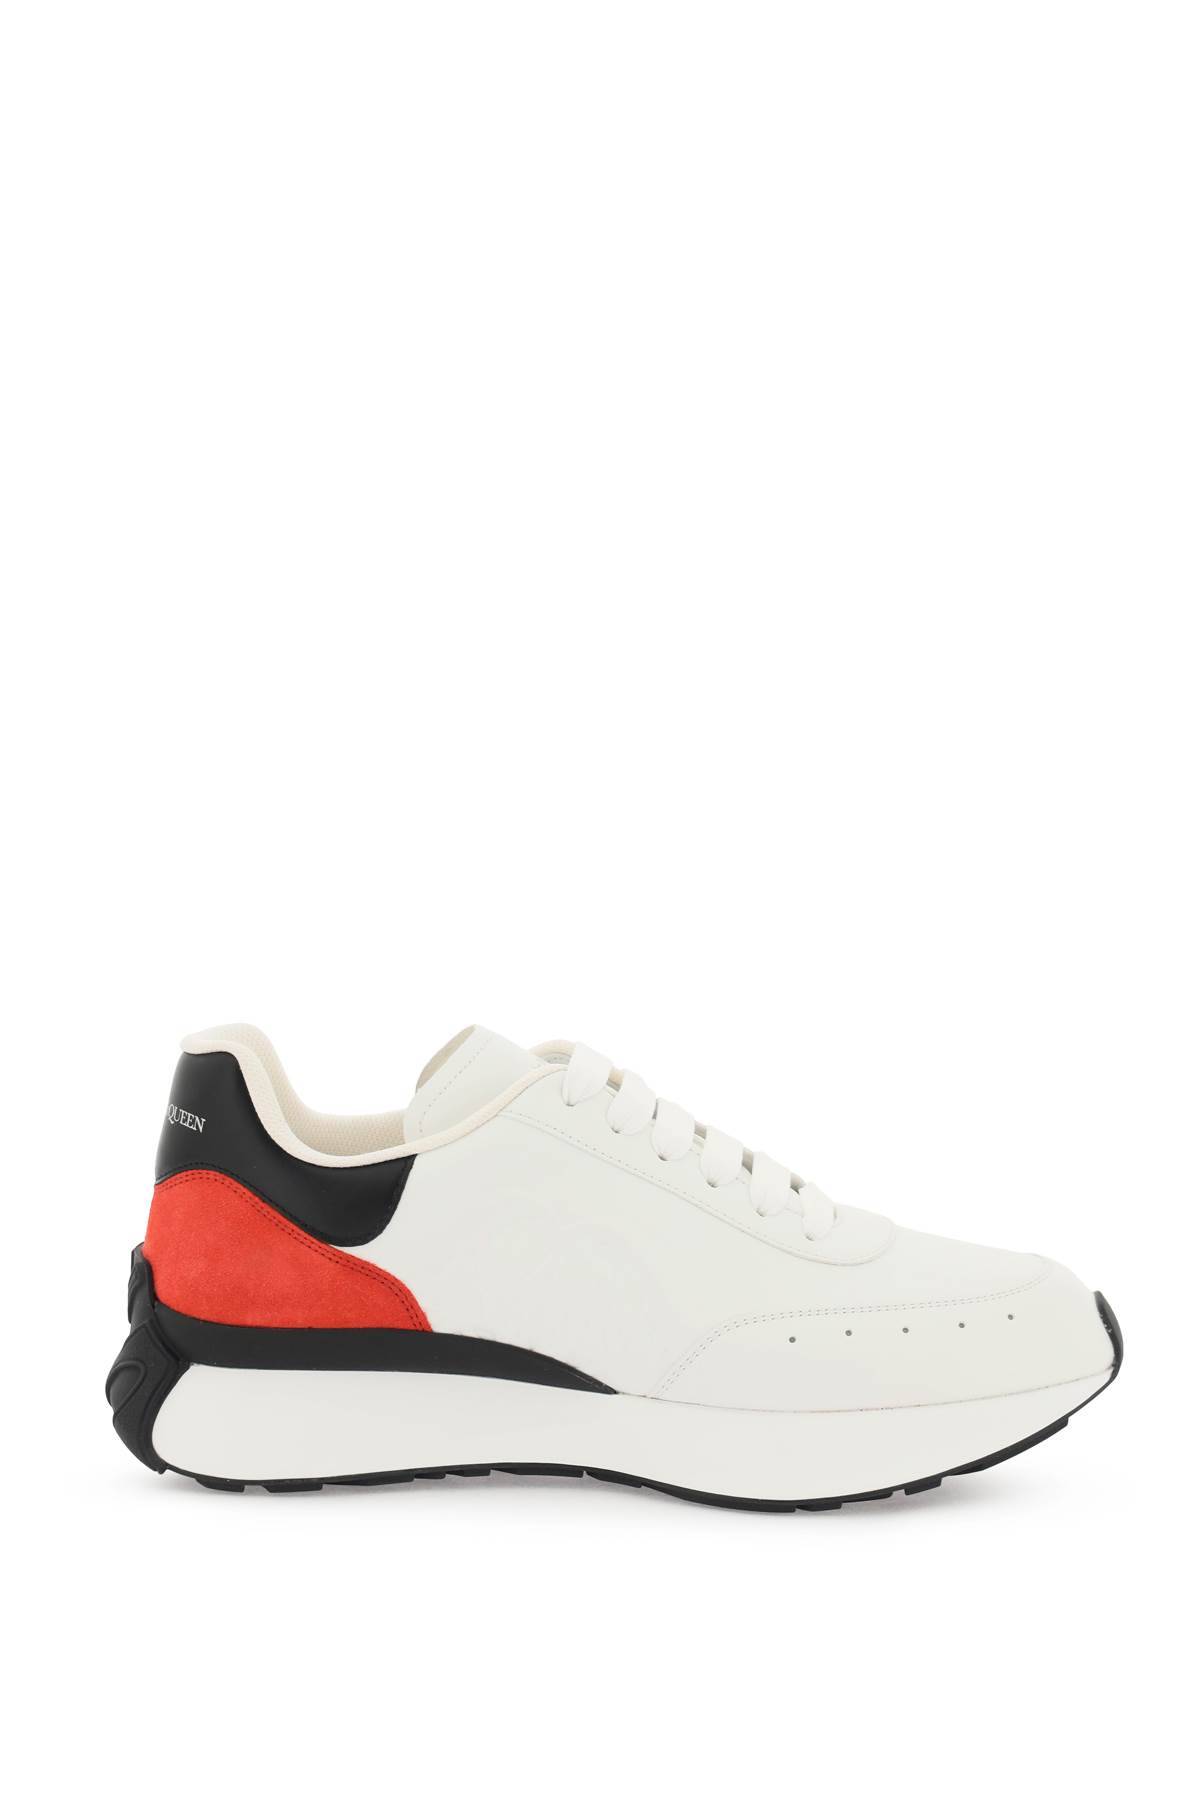 Shop Alexander Mcqueen Sprint Runner Sneakers In White,black,red